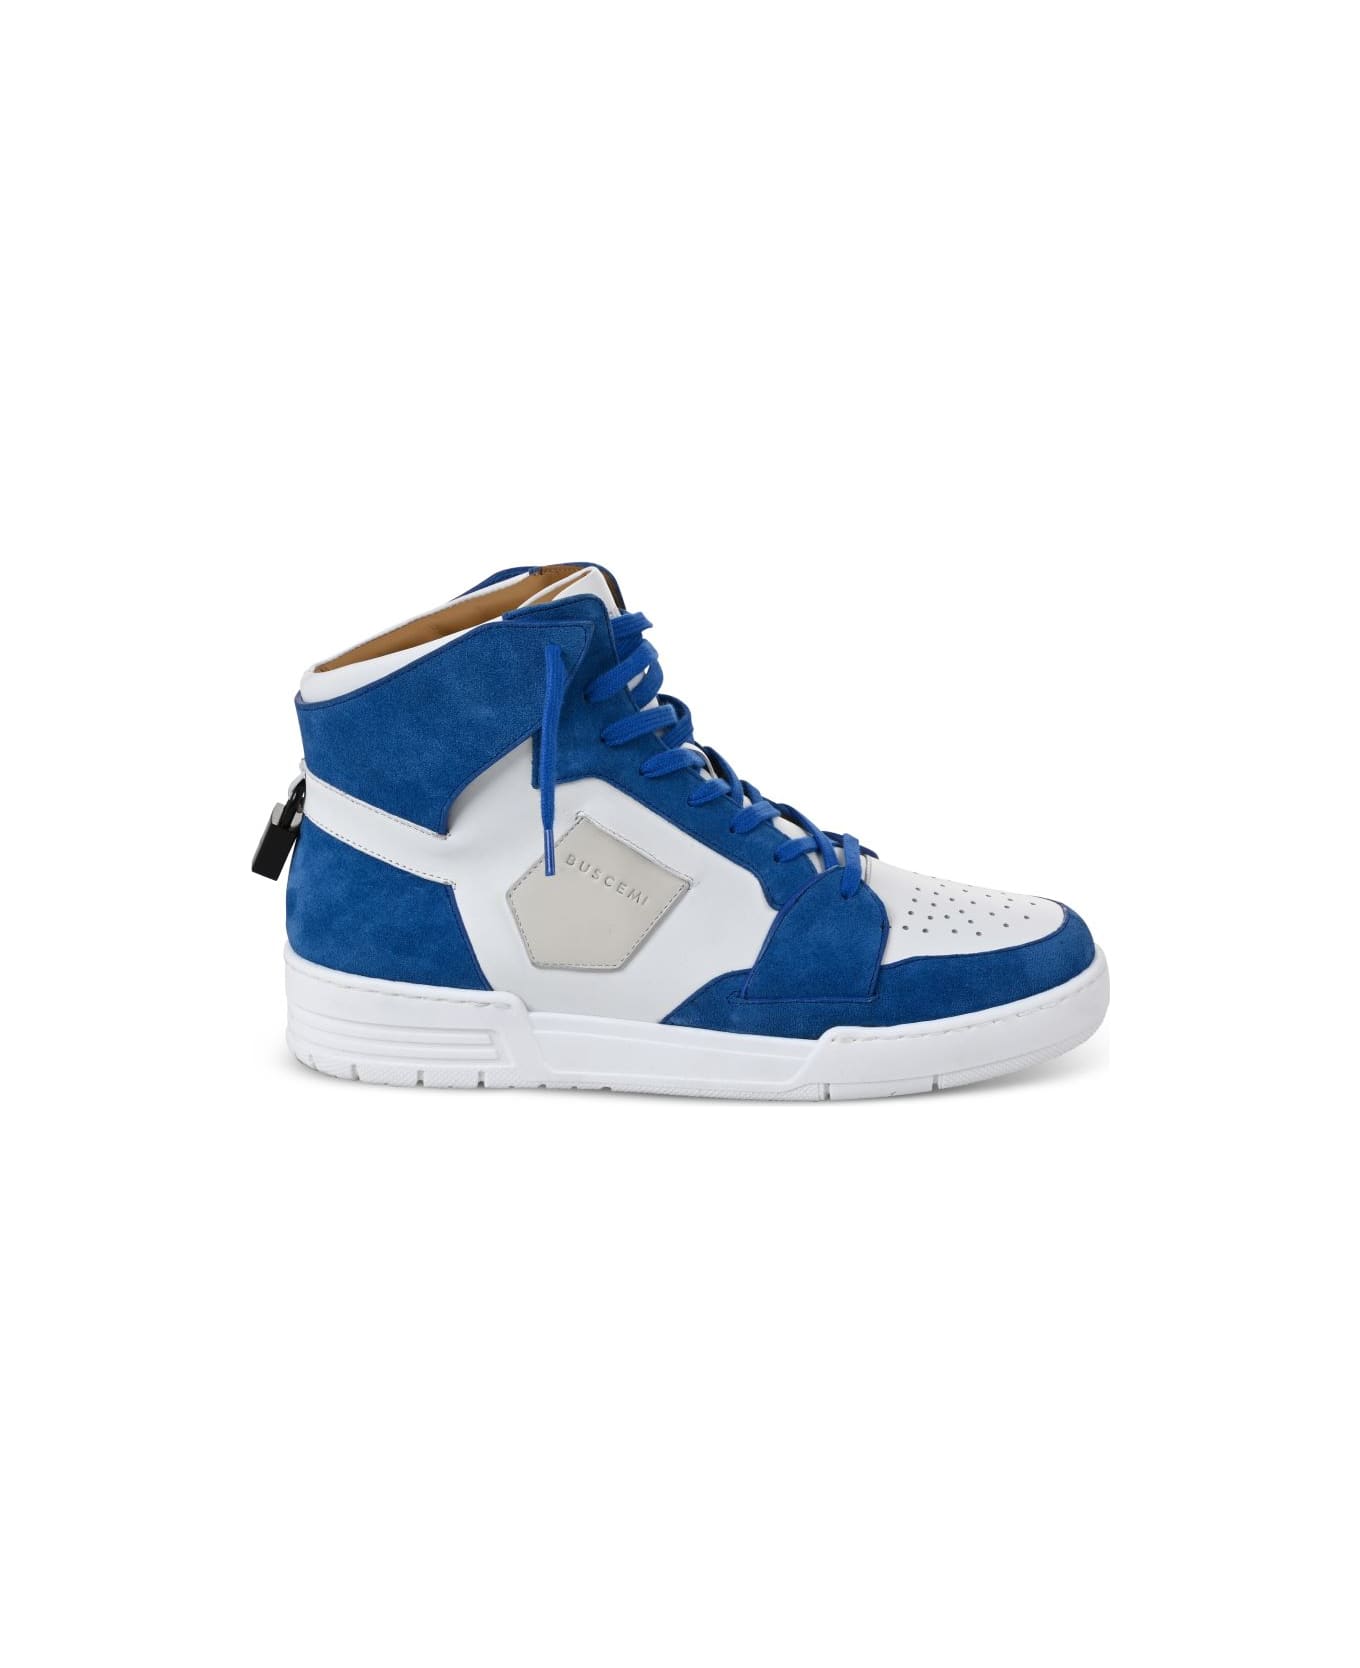 Buscemi Calf Leather Shoes White+blue - WHITE+BLUE